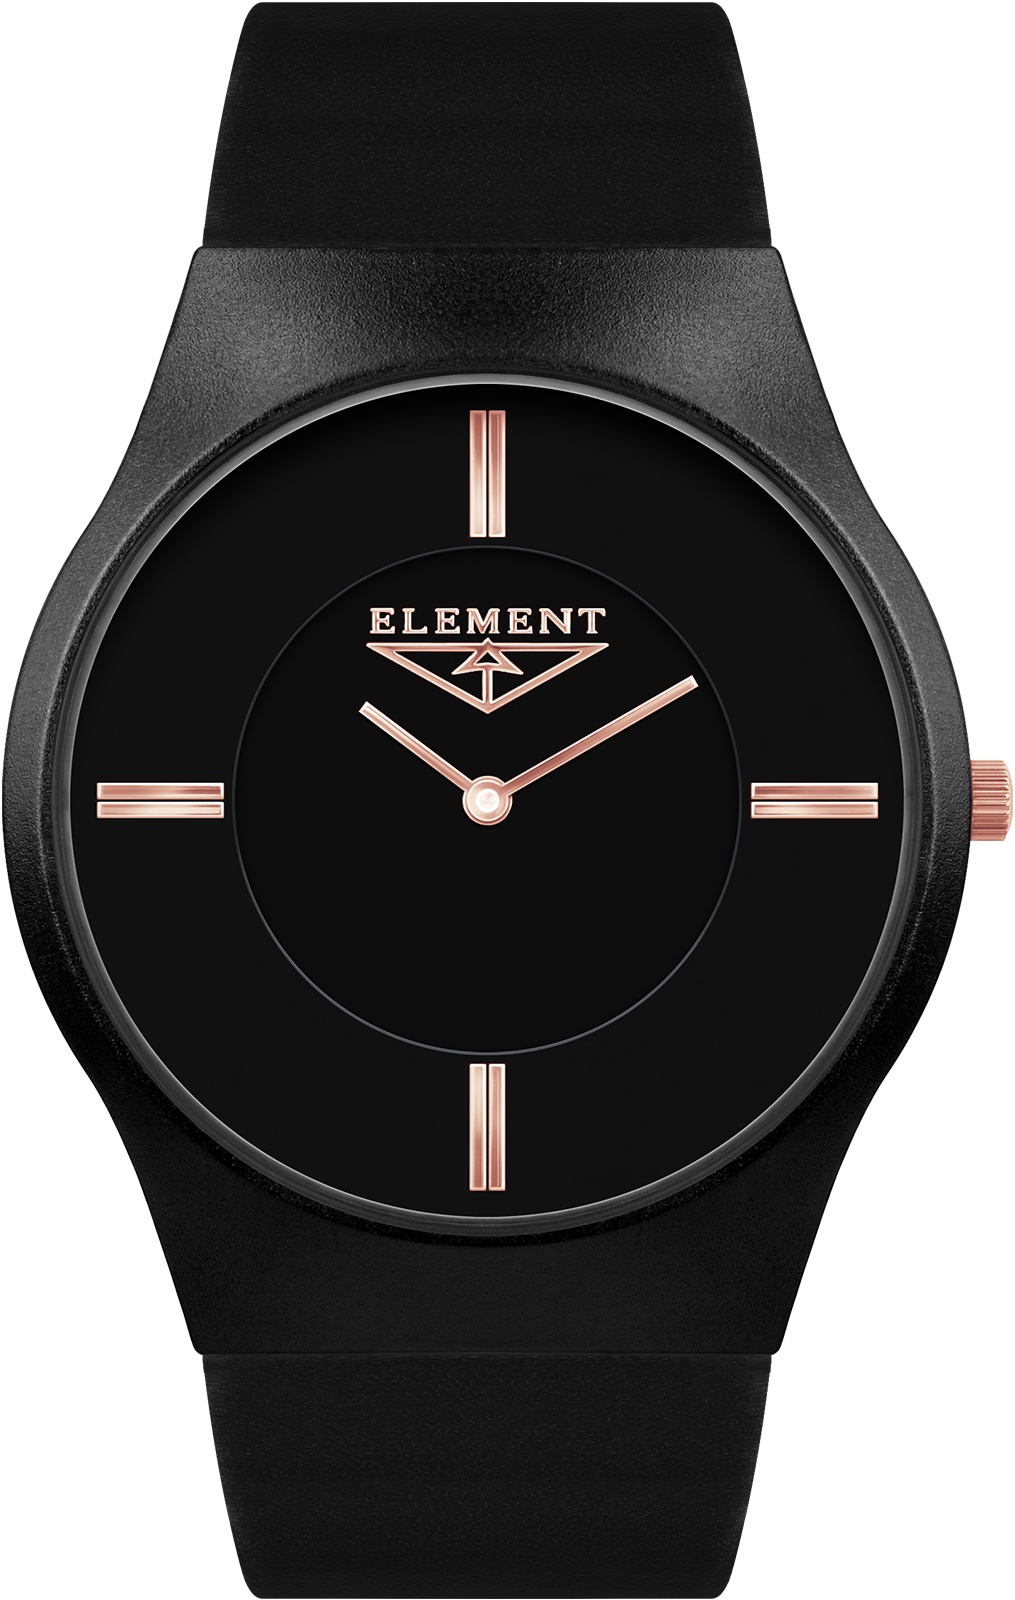 Elemental watch